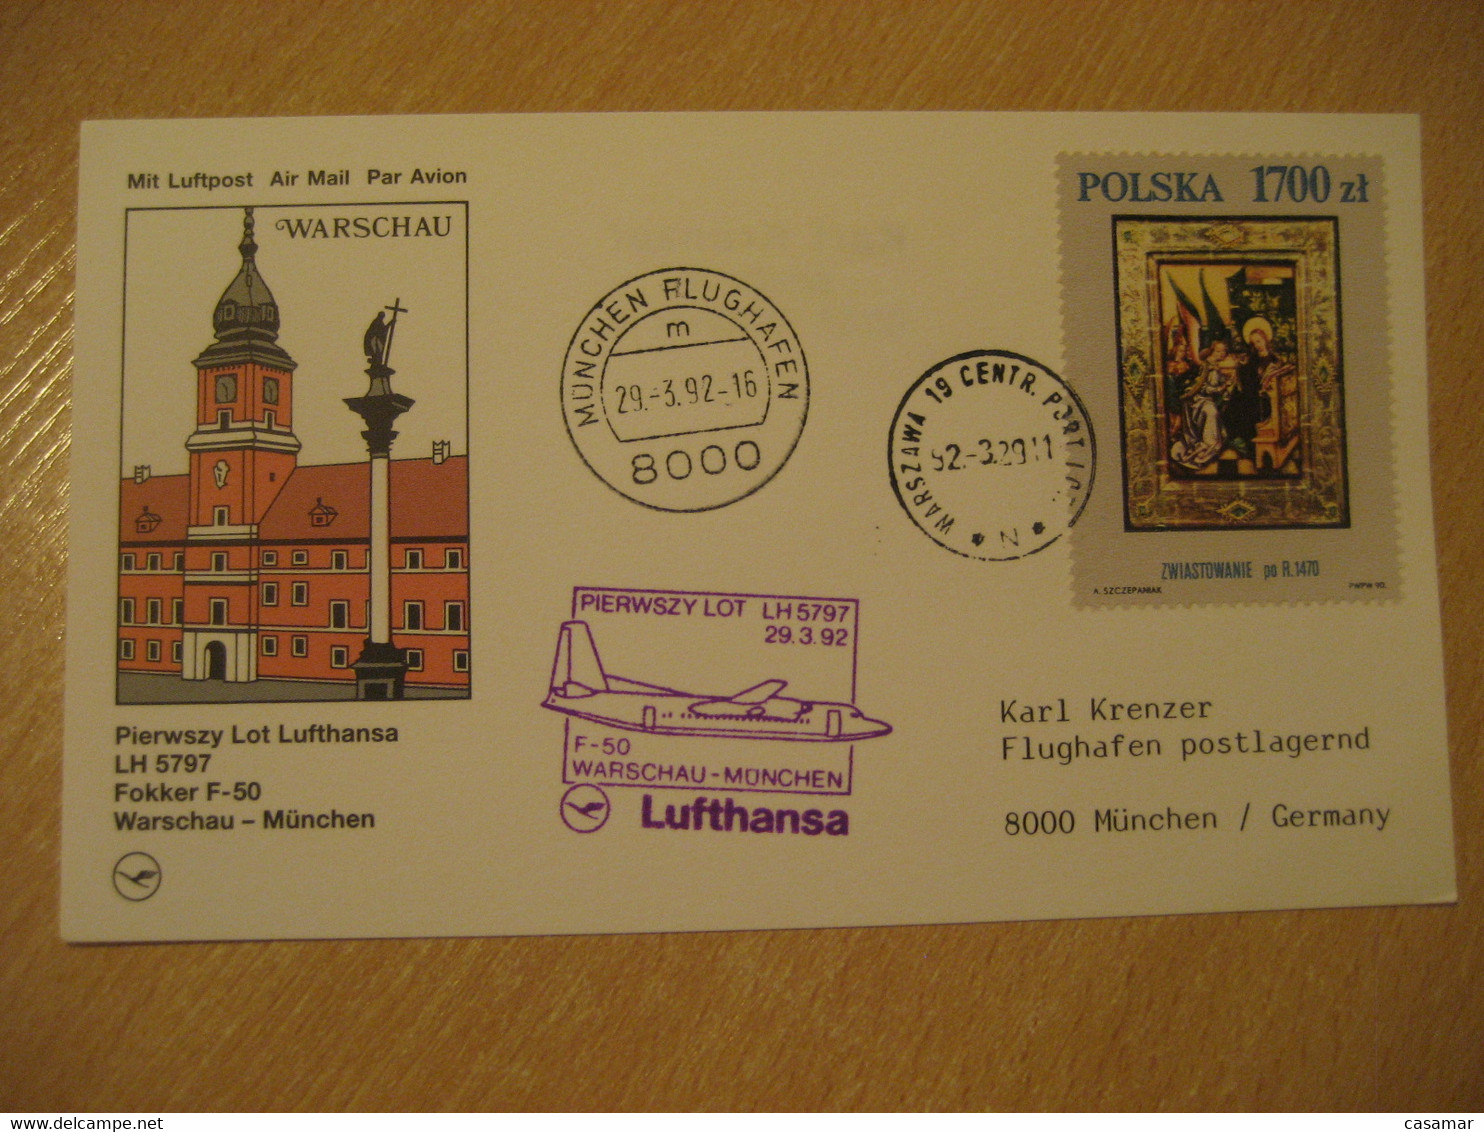 WARSZAWA Warsaw Munich 1992 Lufthansa Airlines Airline Fokker F-50 First Flight Violet Cancel Card POLAND GERMANY - Avions